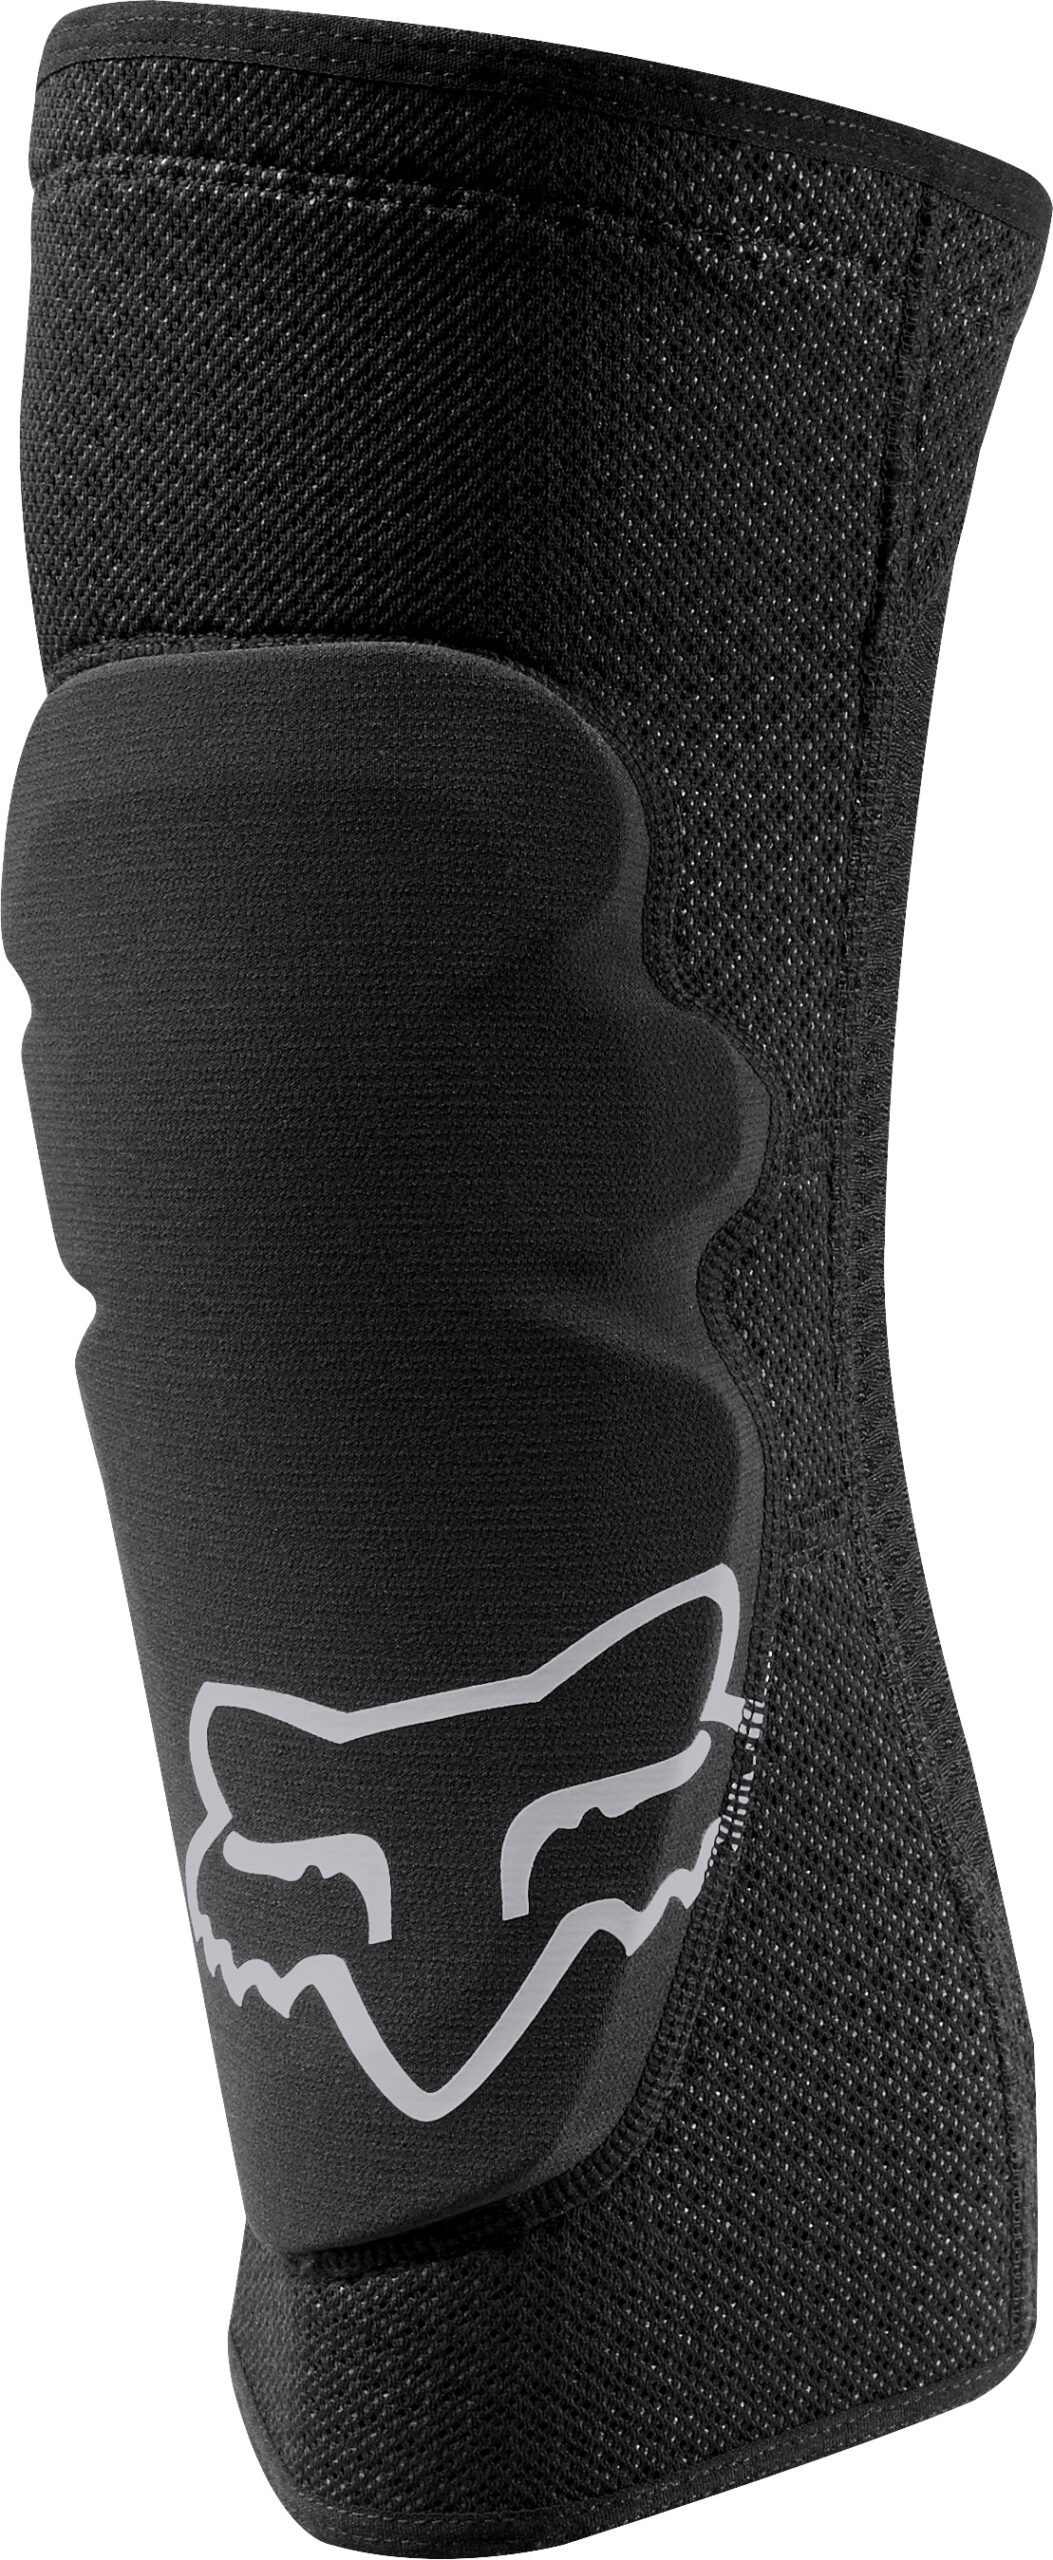 Fx Enduro Knee Sleeve Black 23228 001 1 60.00 Scaled 1